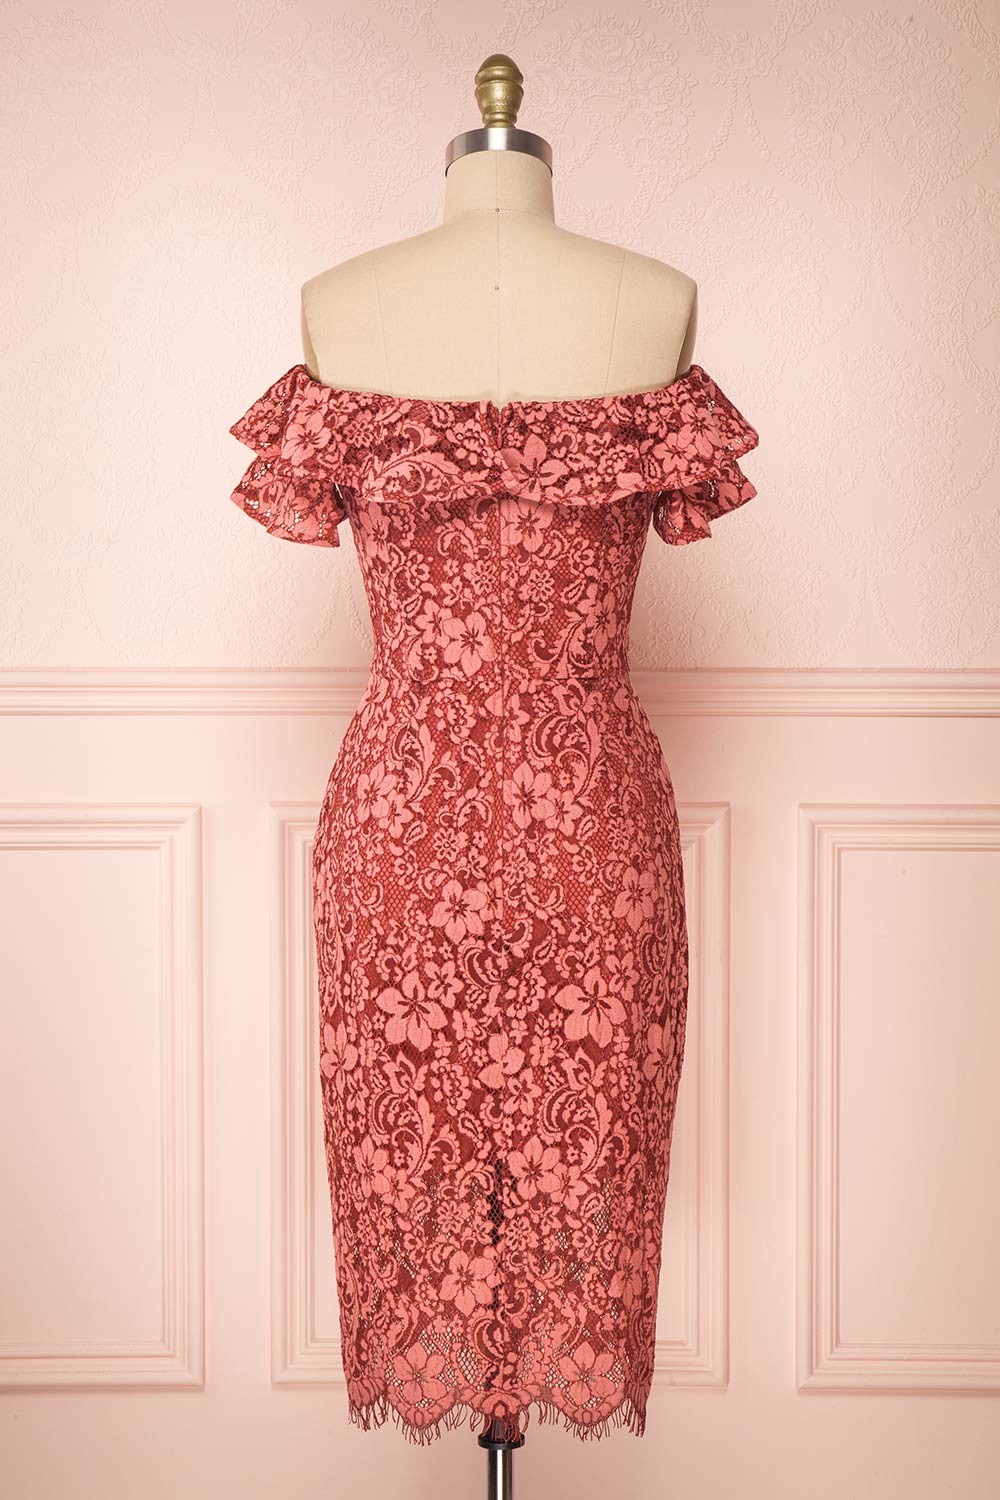 Gwendoline Pink Lace Off-Shoulder Short Fitted Dress | Boutique 1861 back view 